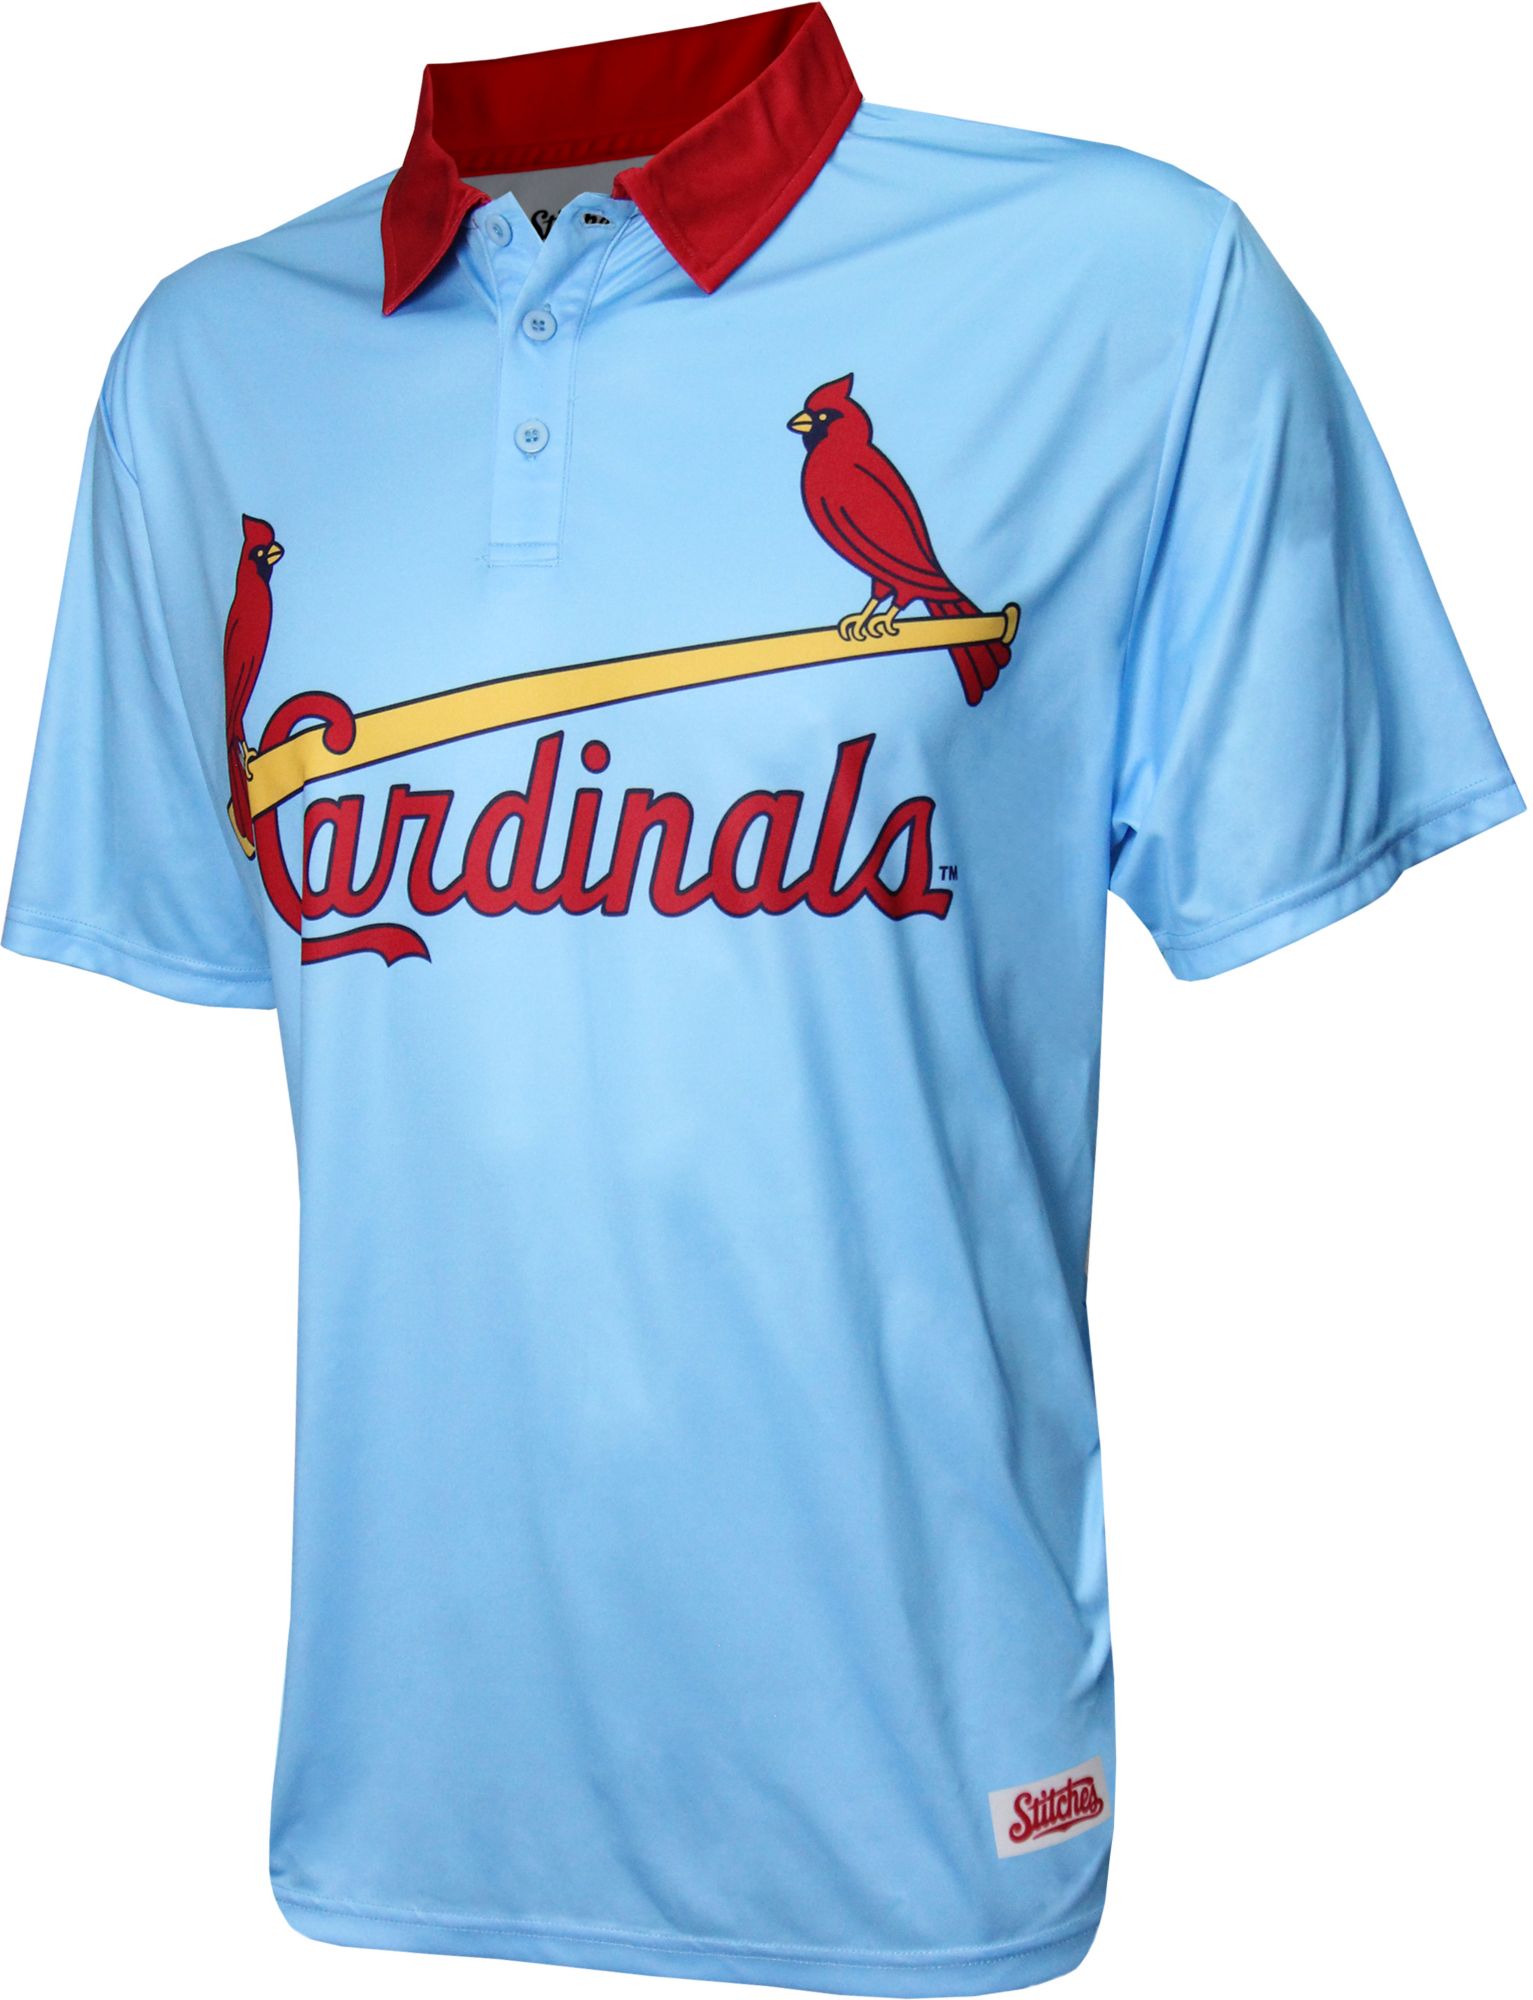 vintage cardinals jersey